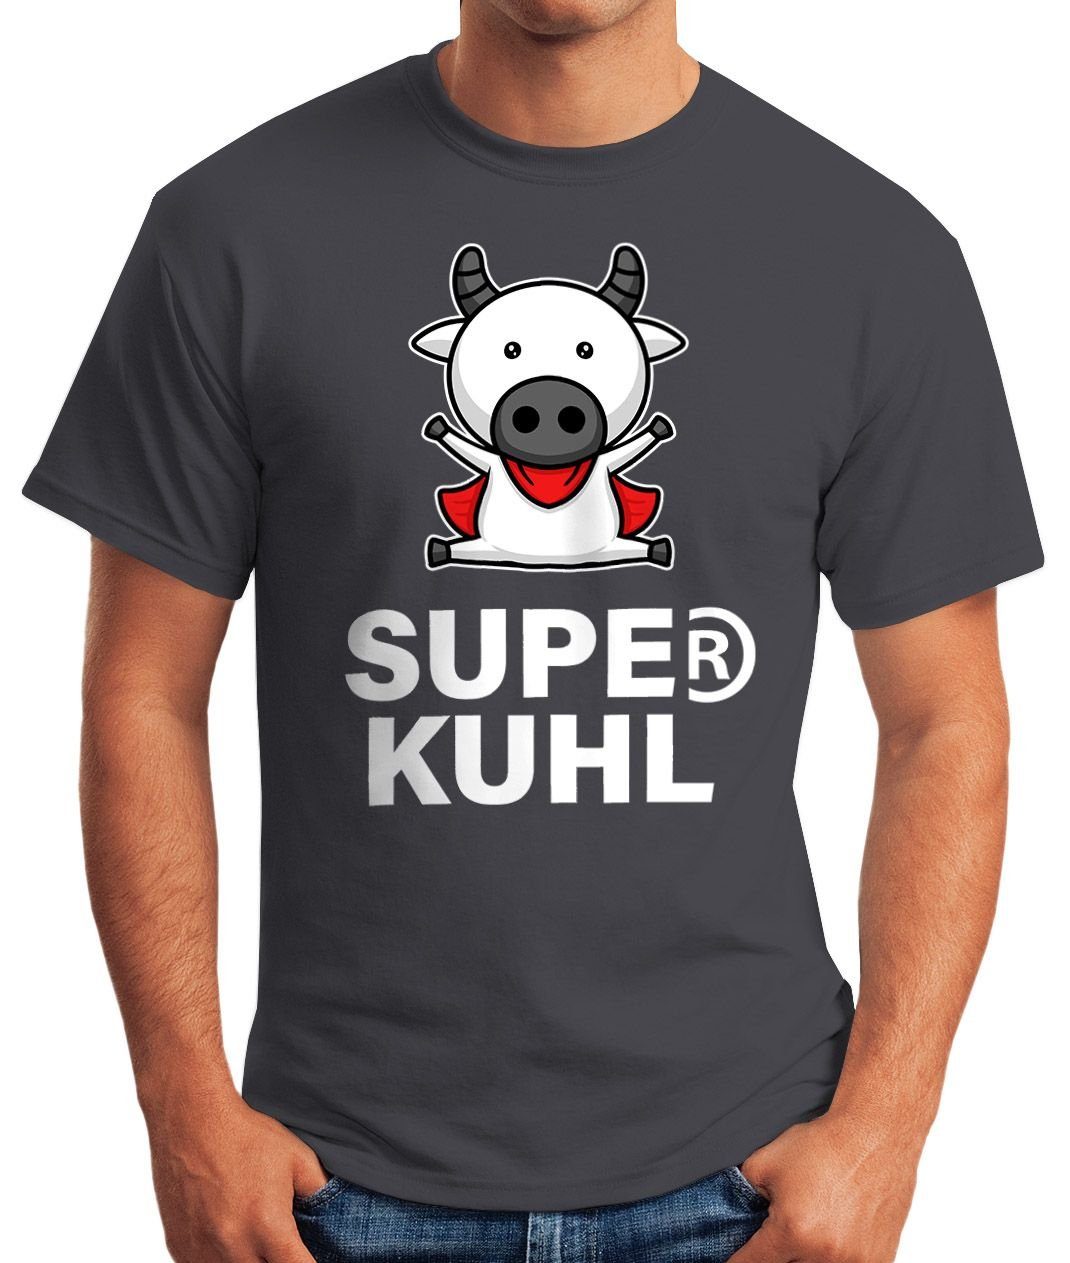 mit grau Lustiges Print Tier-Motiv Moonworks® Kuh Herren Super Print-Shirt T-Shirt Kuhl MoonWorks Fun-Shirt